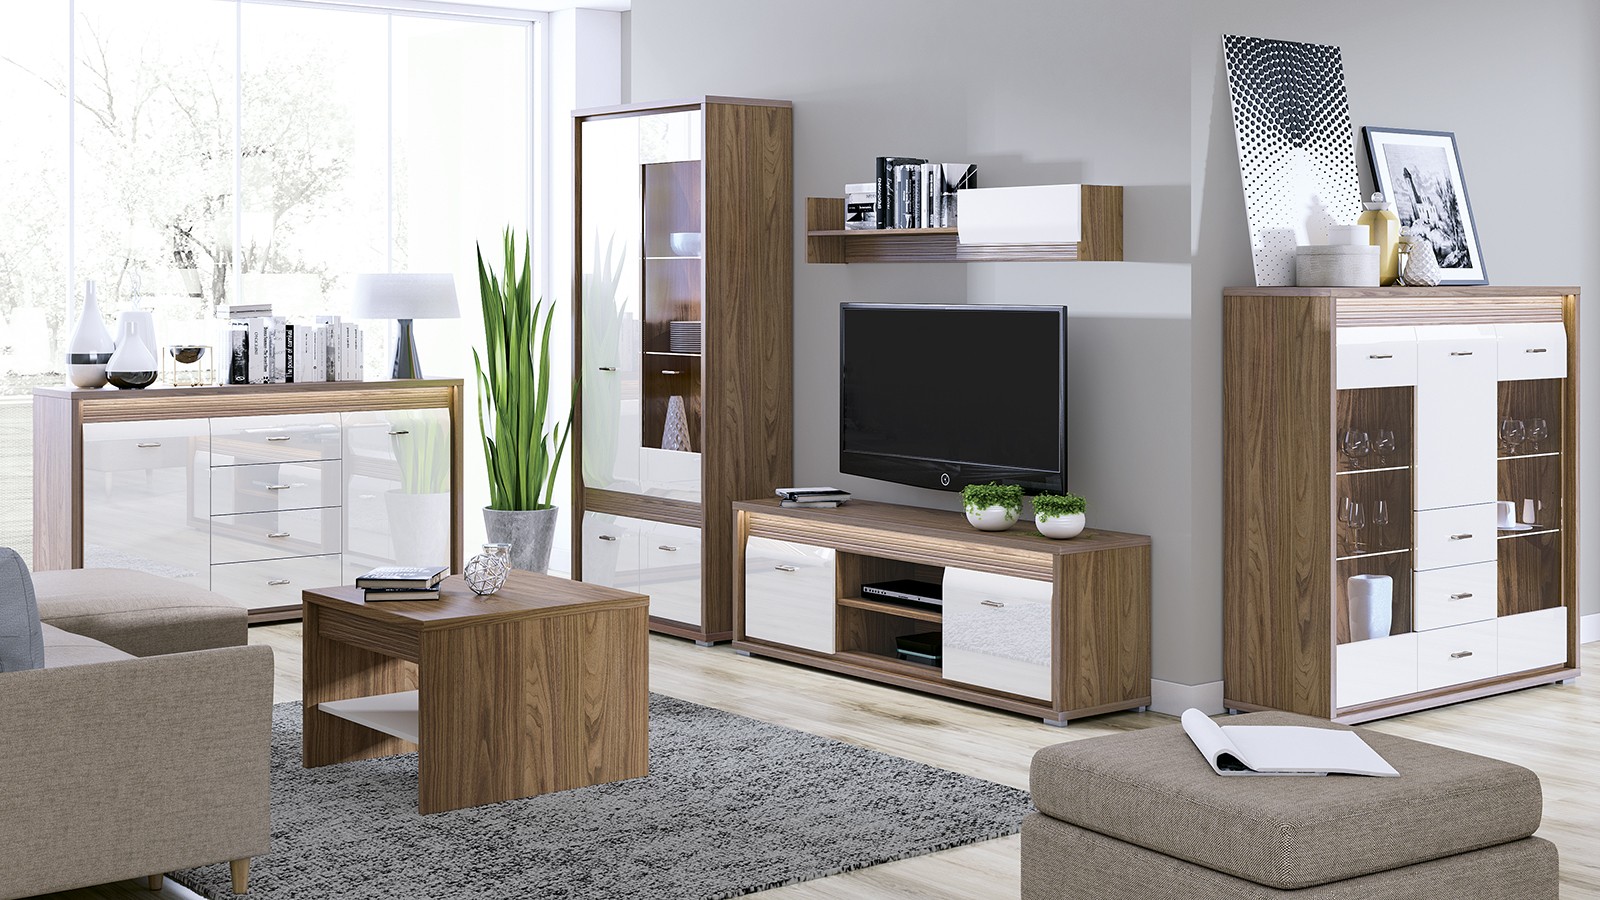 Dalia System - J&B Furniture